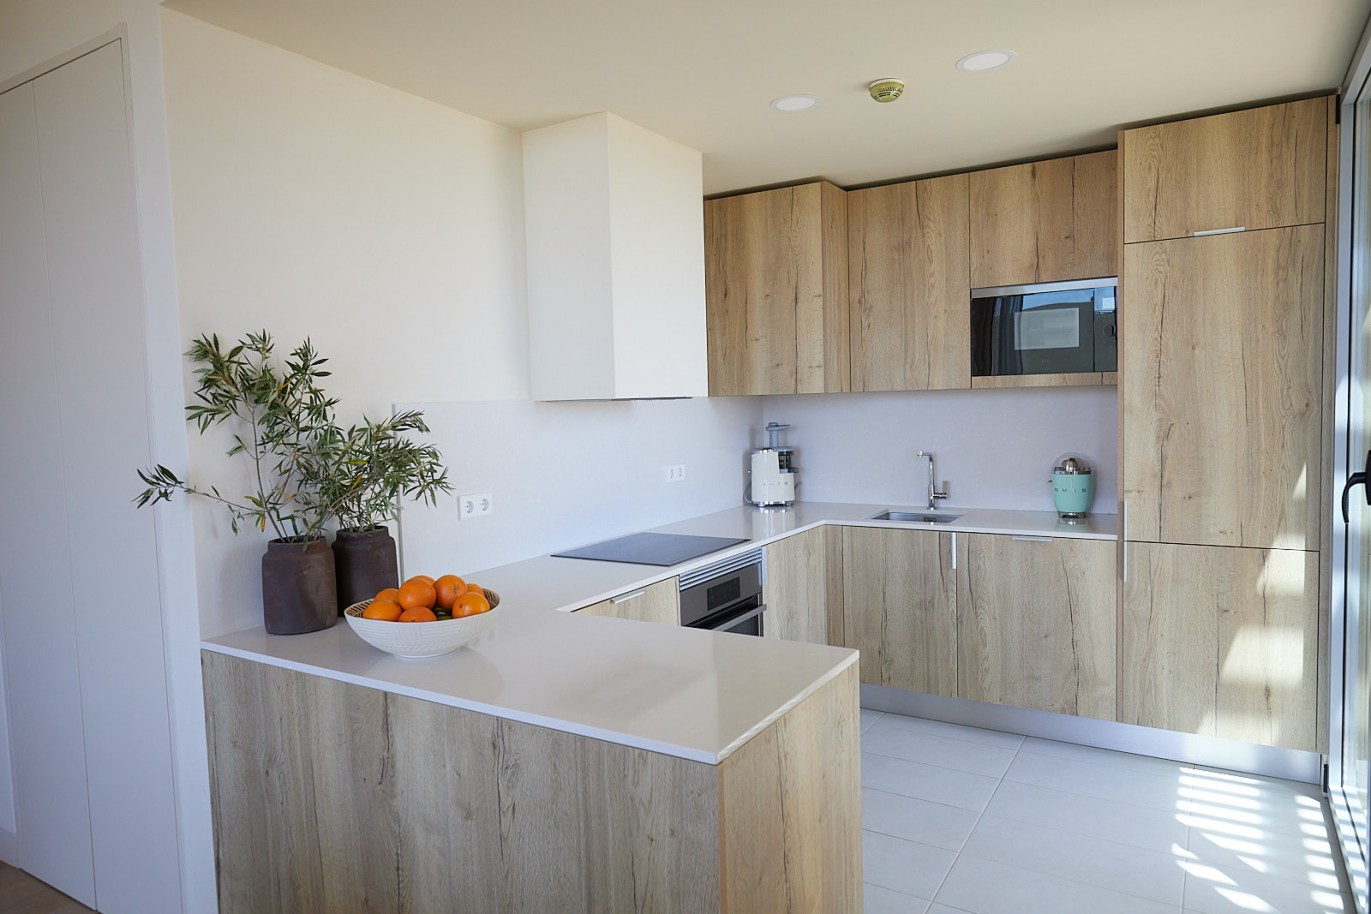 2 bedroom apartment in resort, for sale in Porches, Algarve_229257